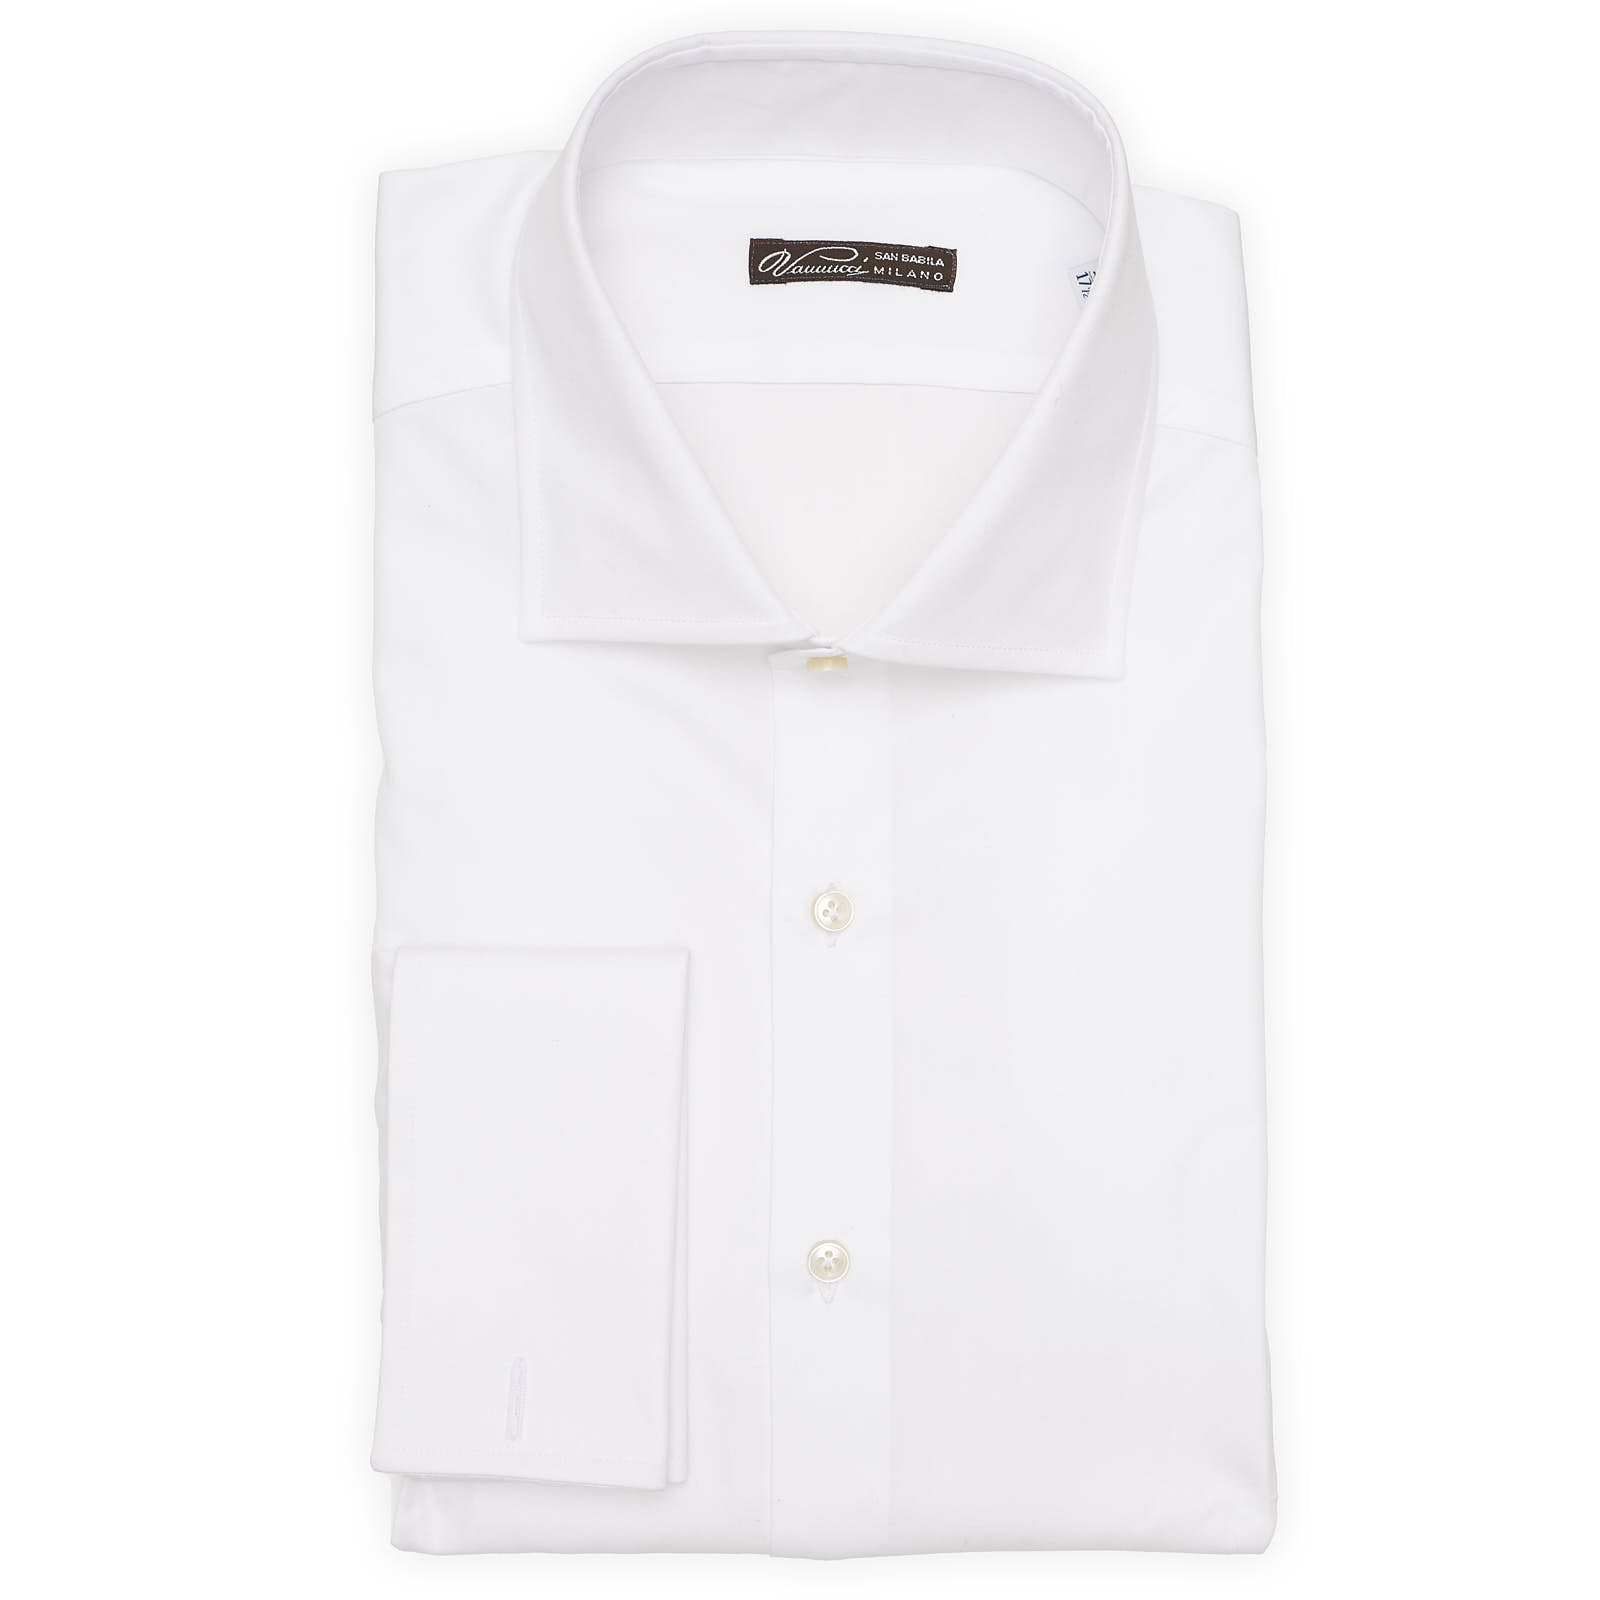 VANNUCCI Milano White Twill Cotton French Cuff Dress Shirt EU 44 NEW US 17.5